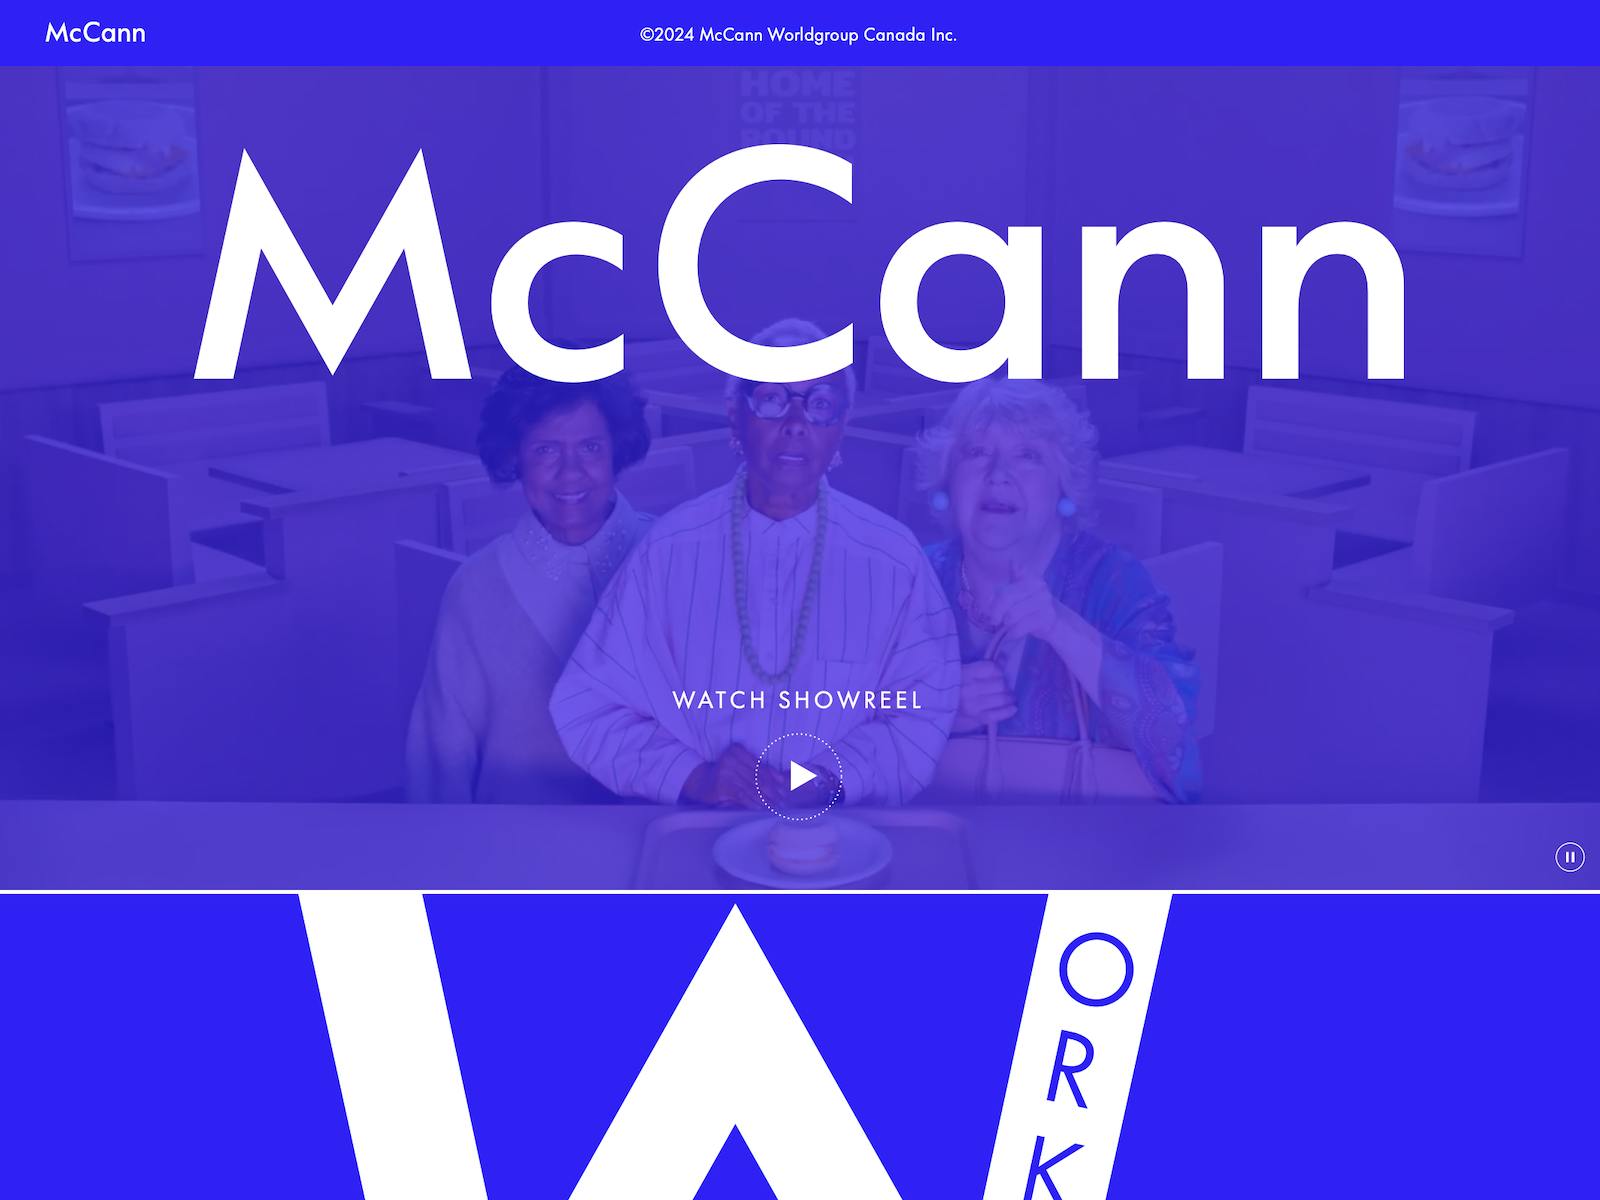 McCann Website Image 